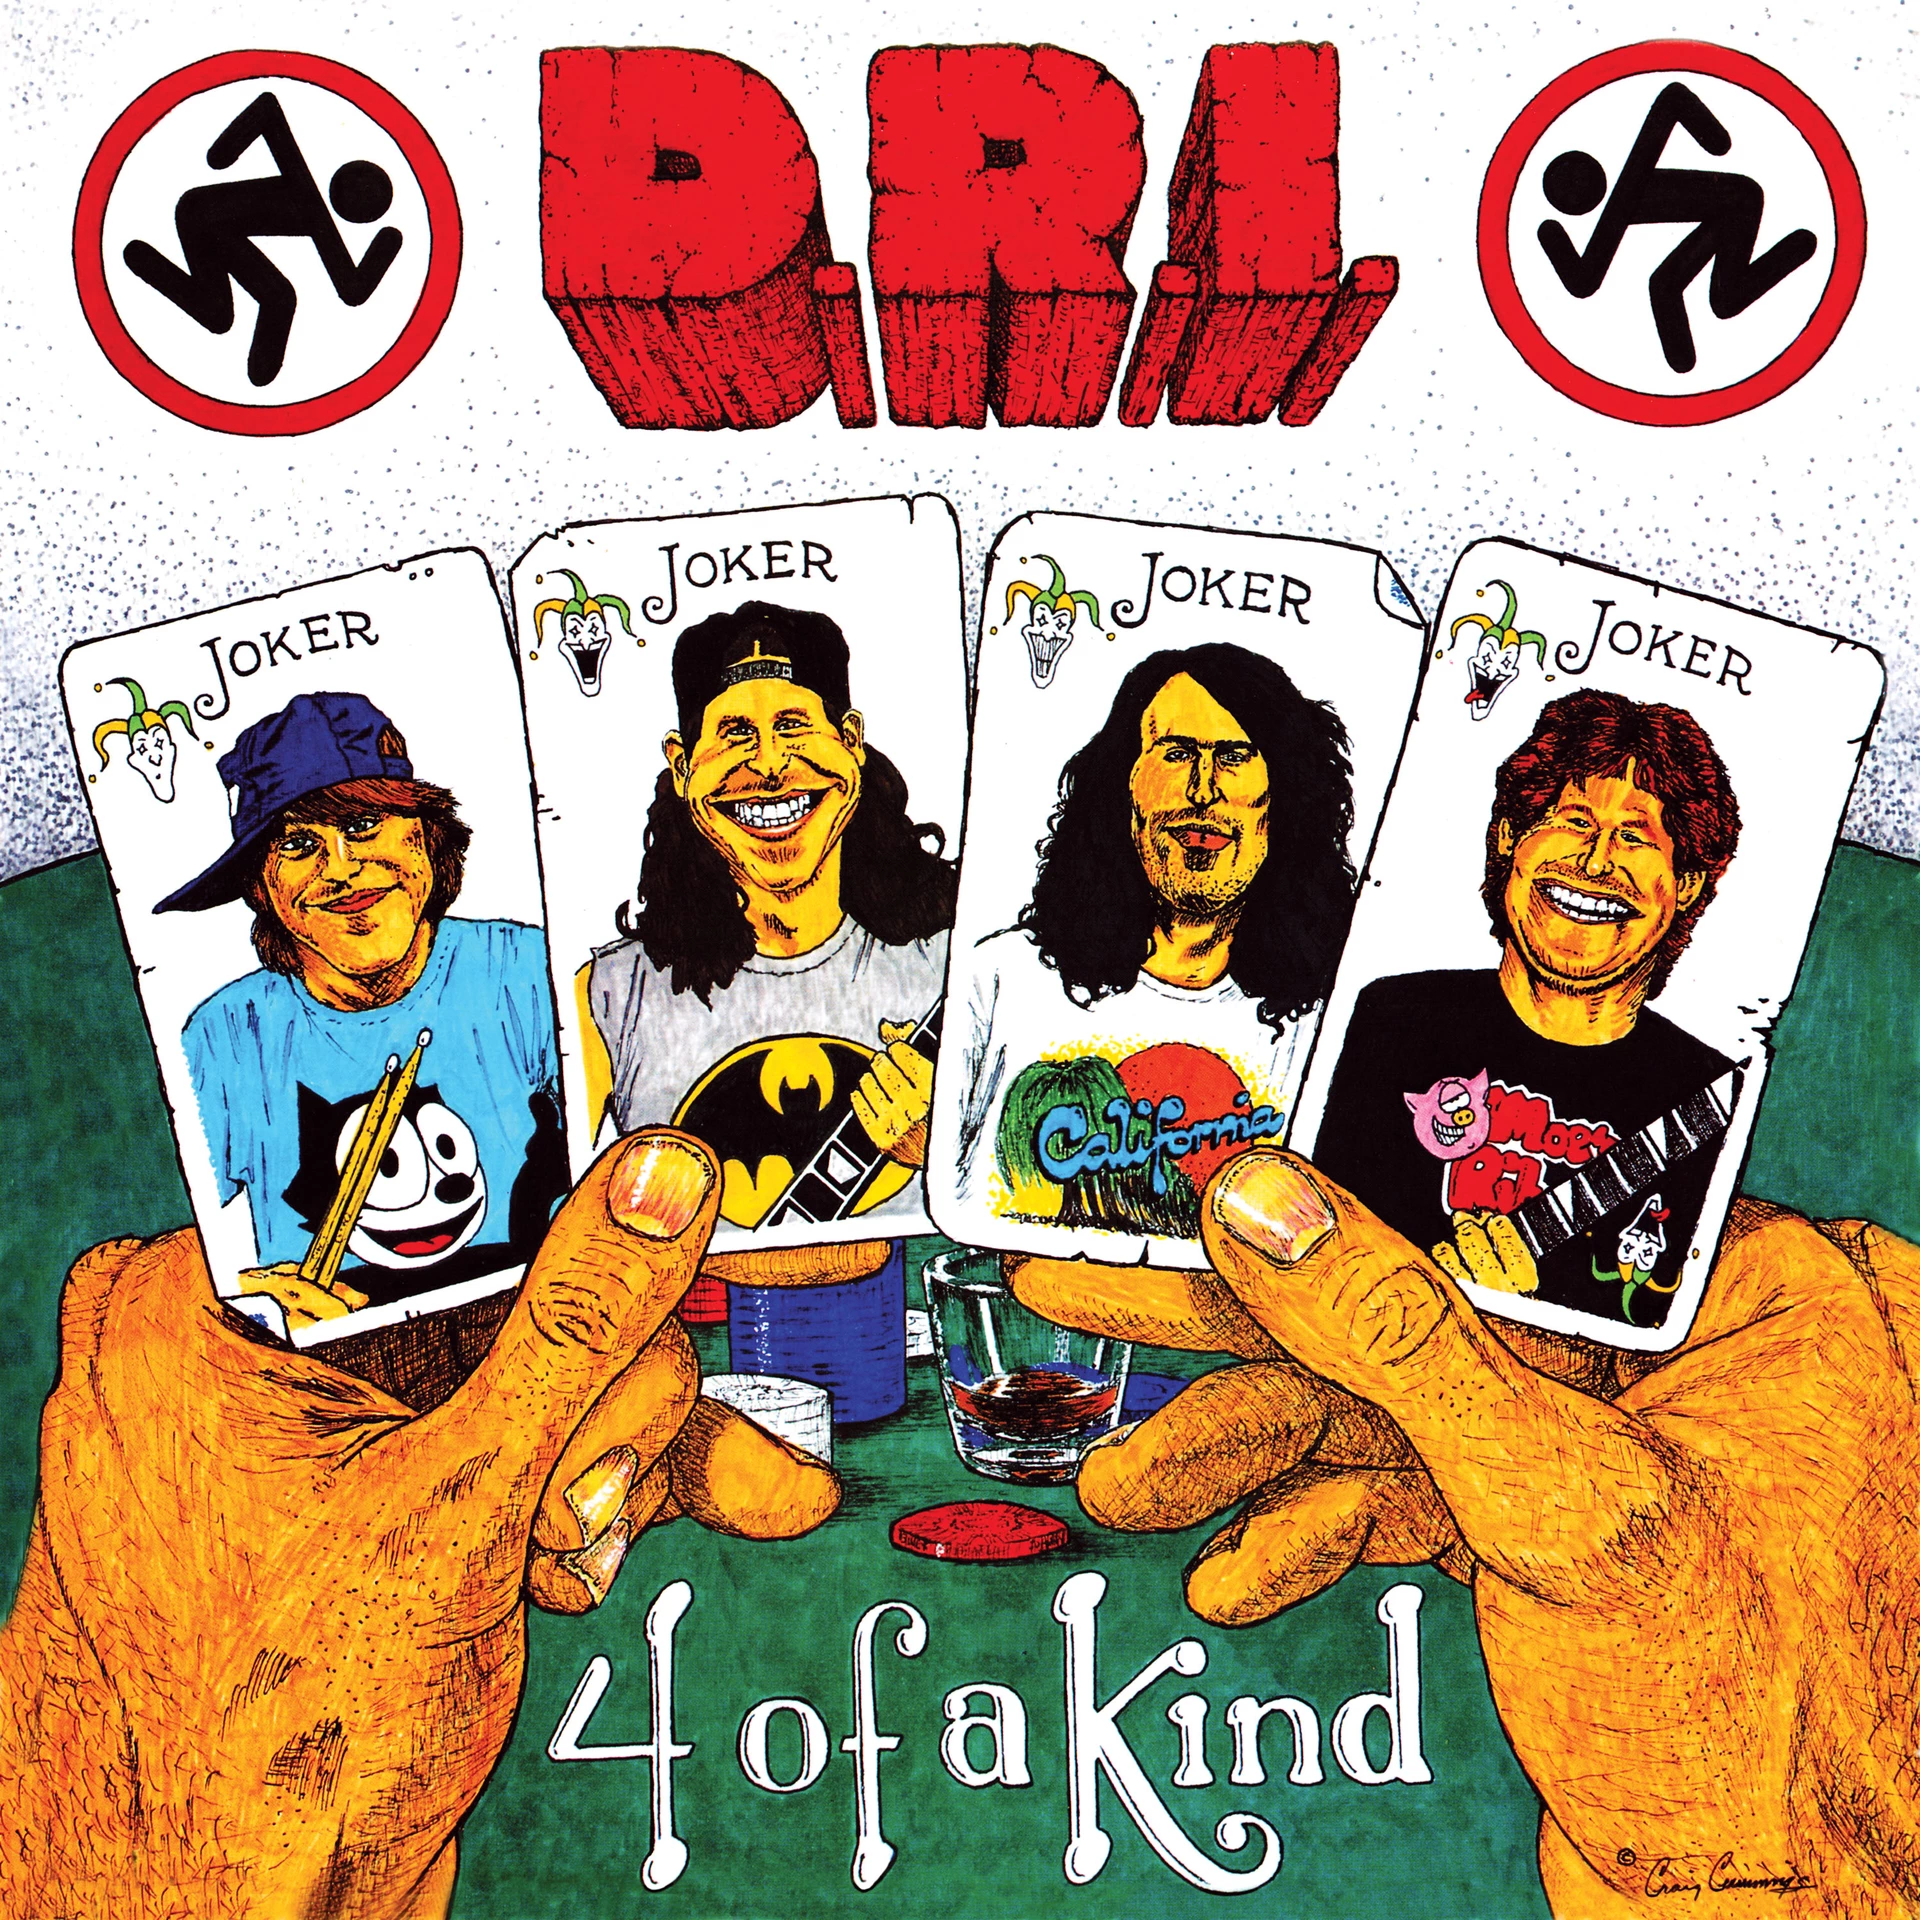 DRI - 4 of a Kind [AZURE BLUE LP]